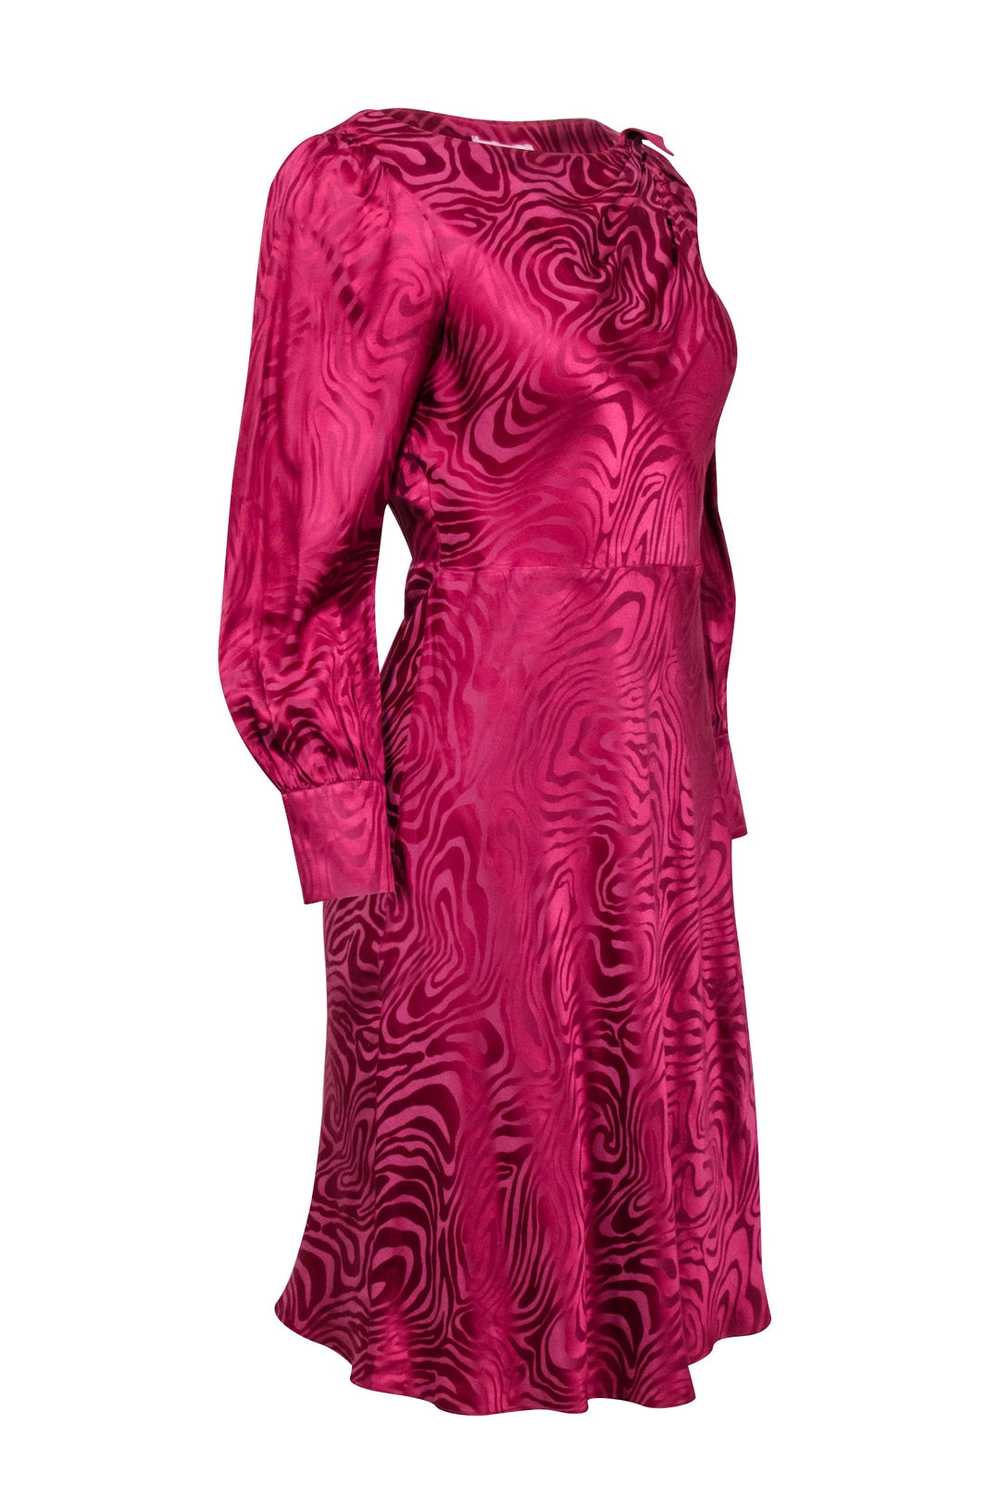 Rebecca Taylor - Pink Swirl Print Silk Blend A-Li… - image 2